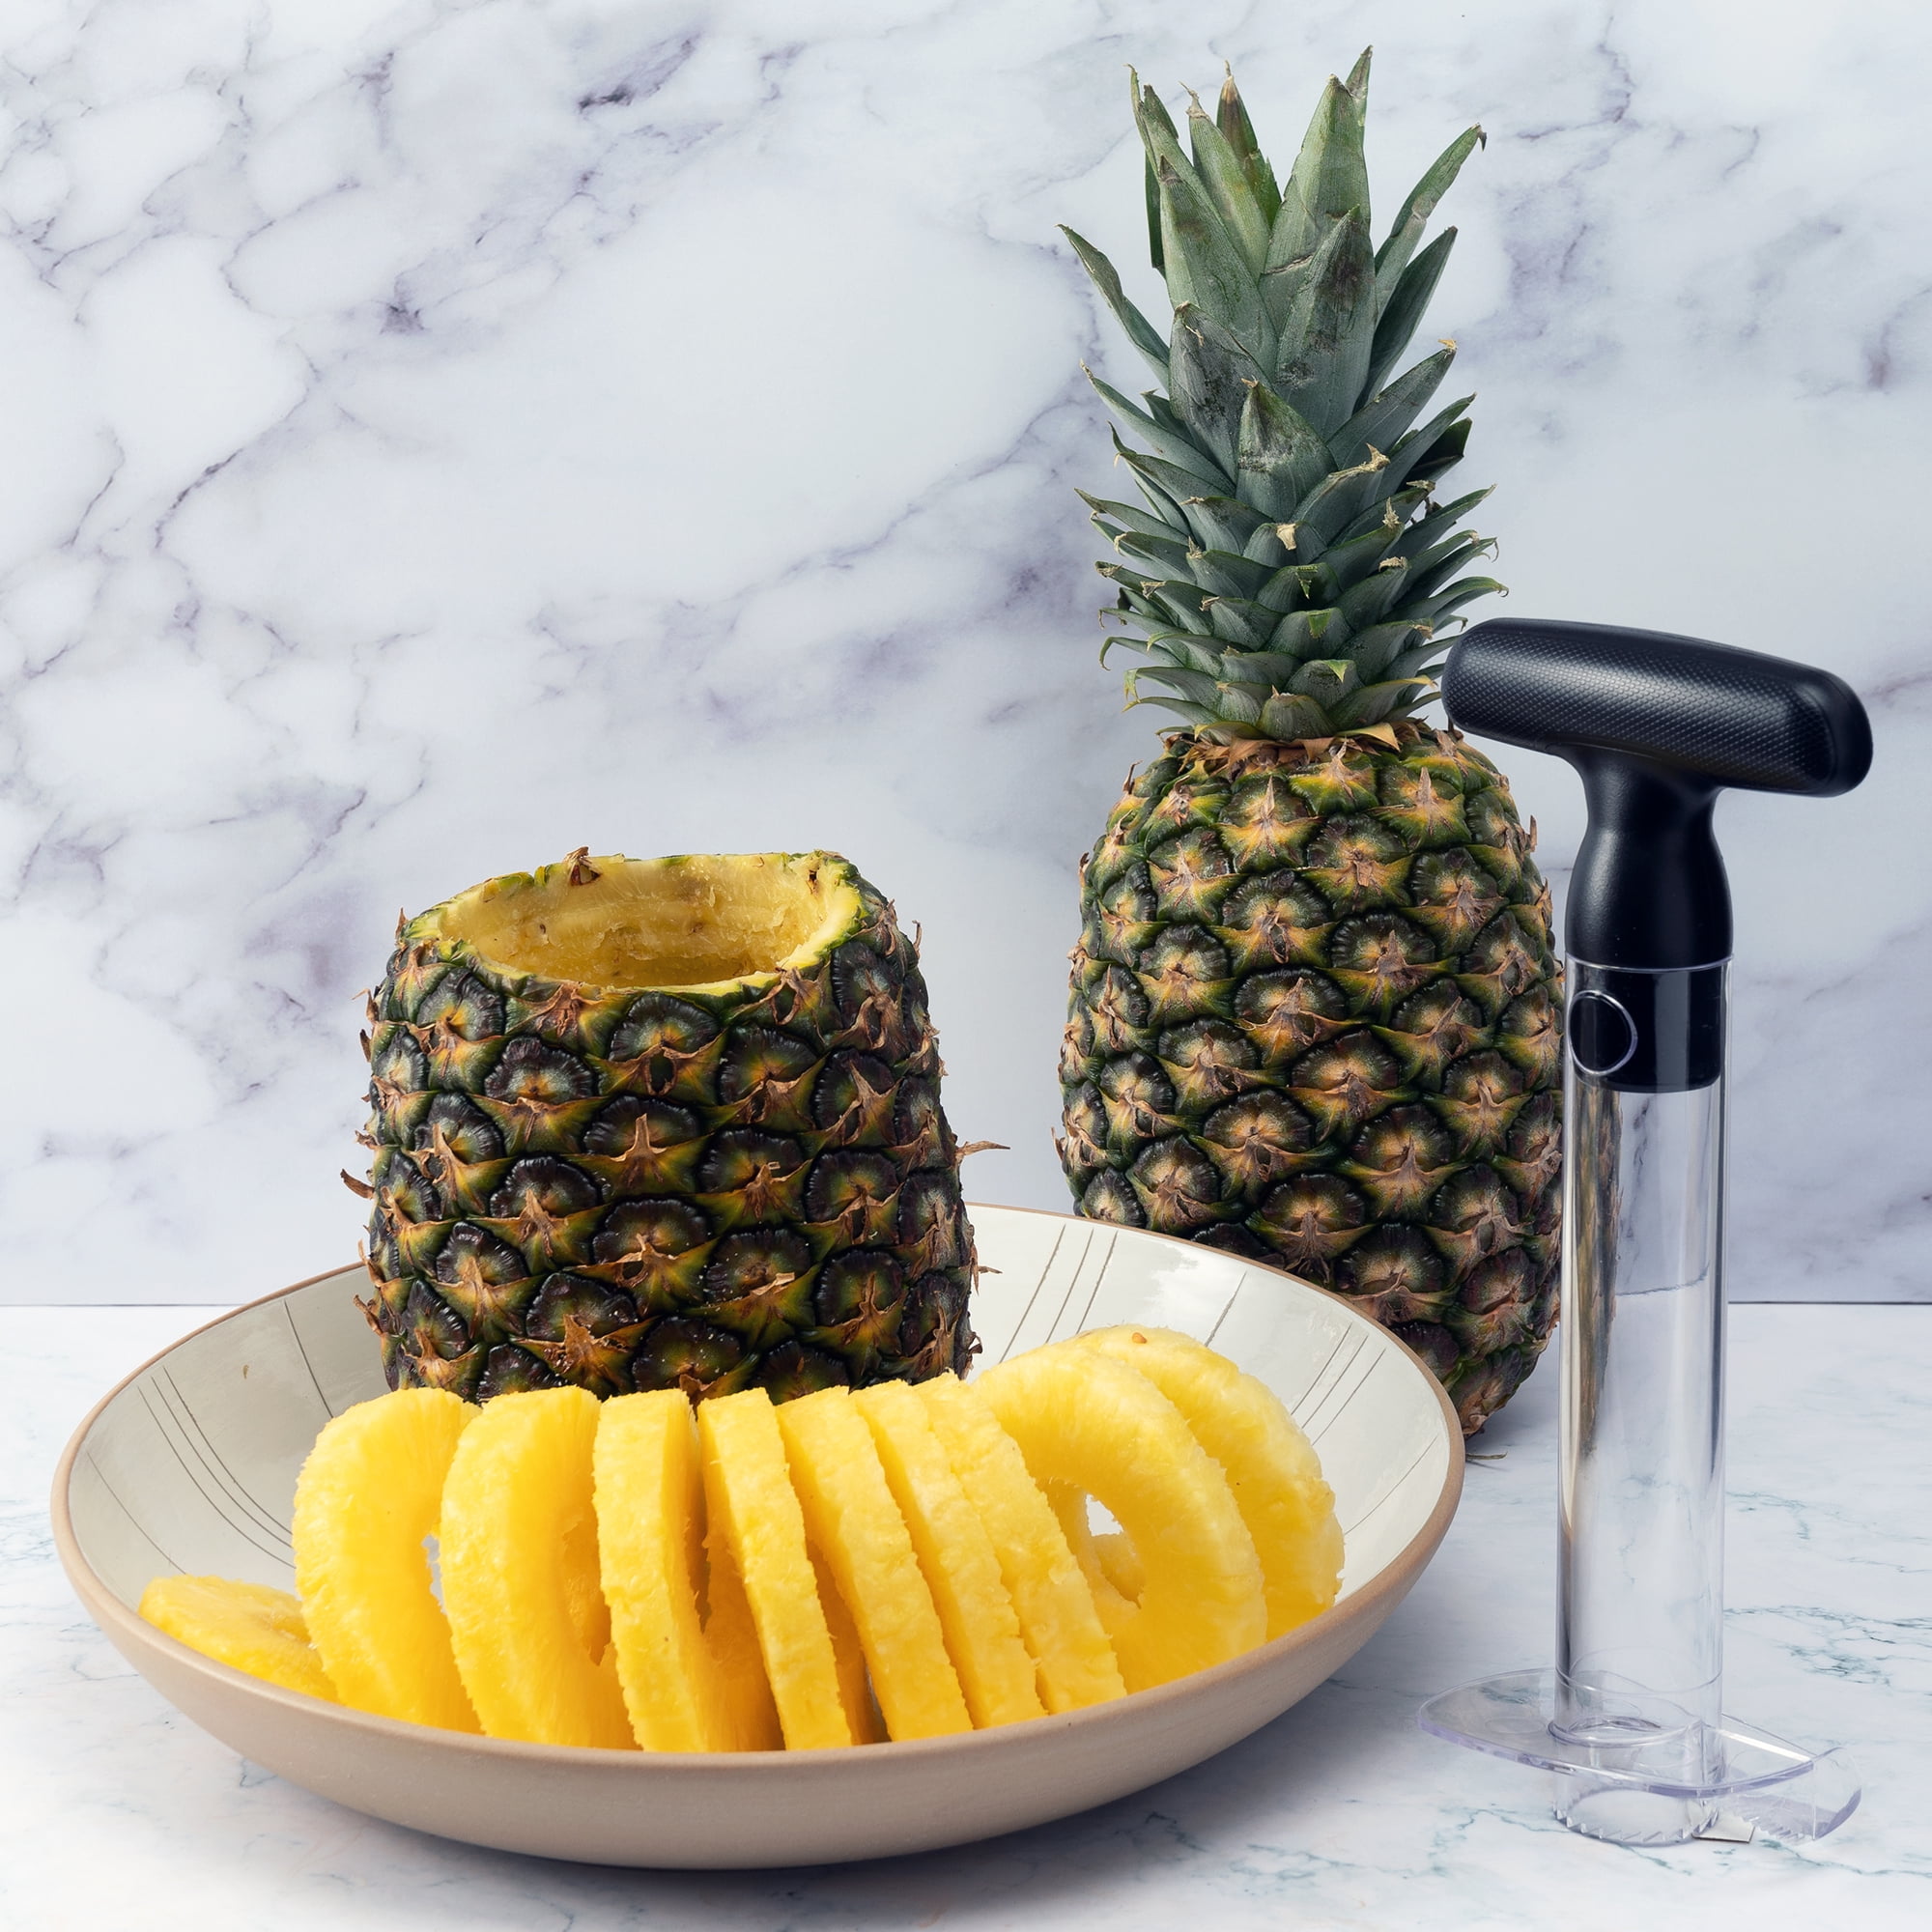 Farberware Fresh Pineapple Corer